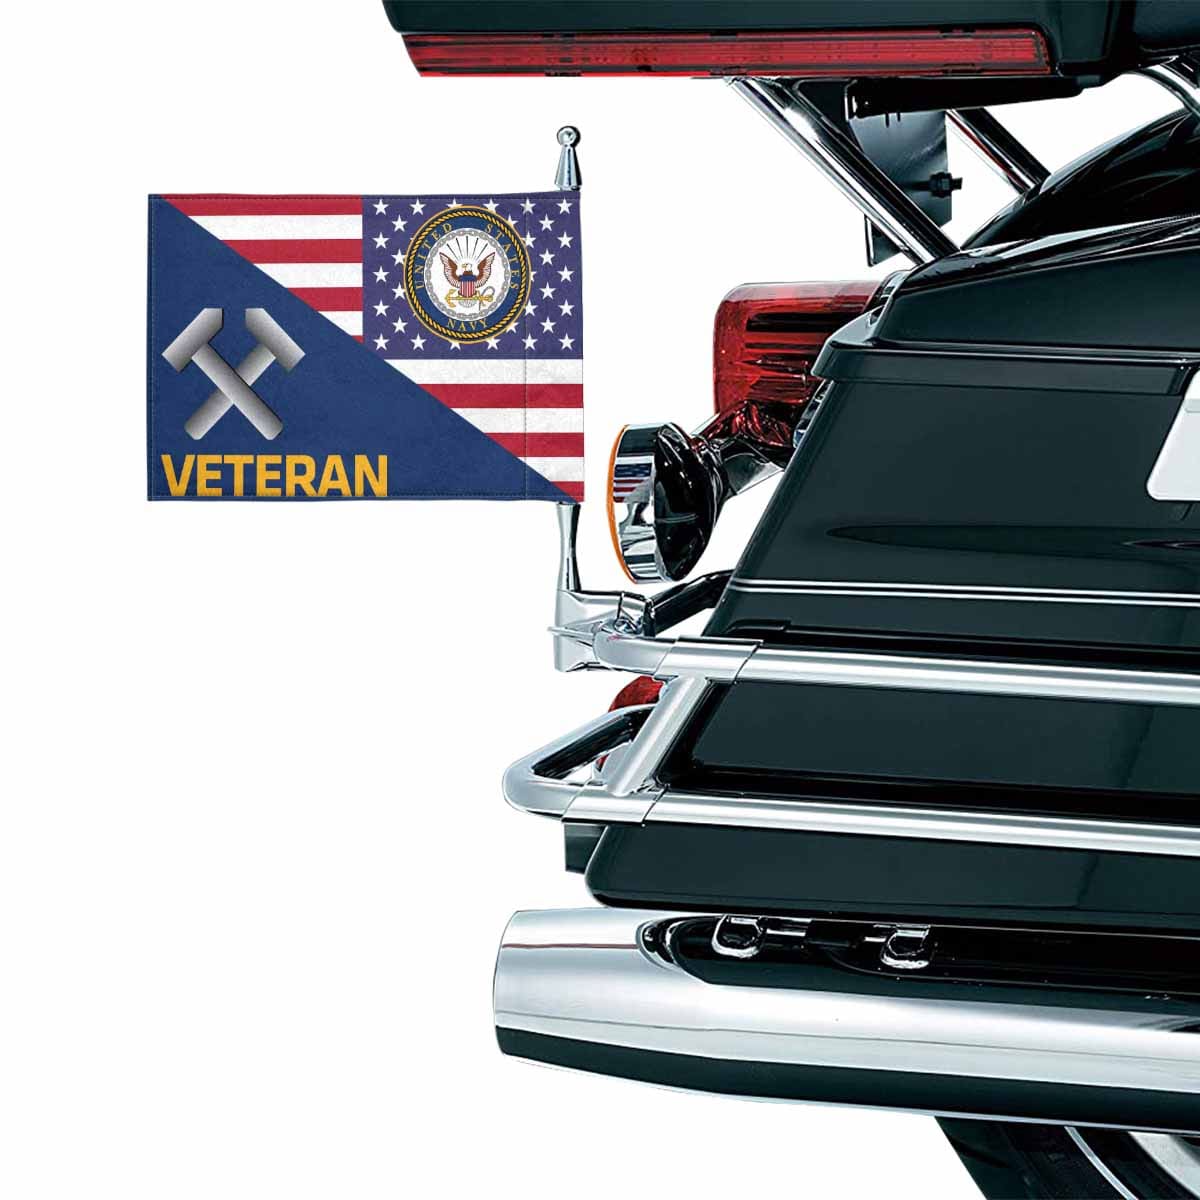 US Navy Shipfitter SF Veteran Motorcycle Flag 9" x 6" Twin-Side Printing D01-MotorcycleFlag-Navy-Veterans Nation